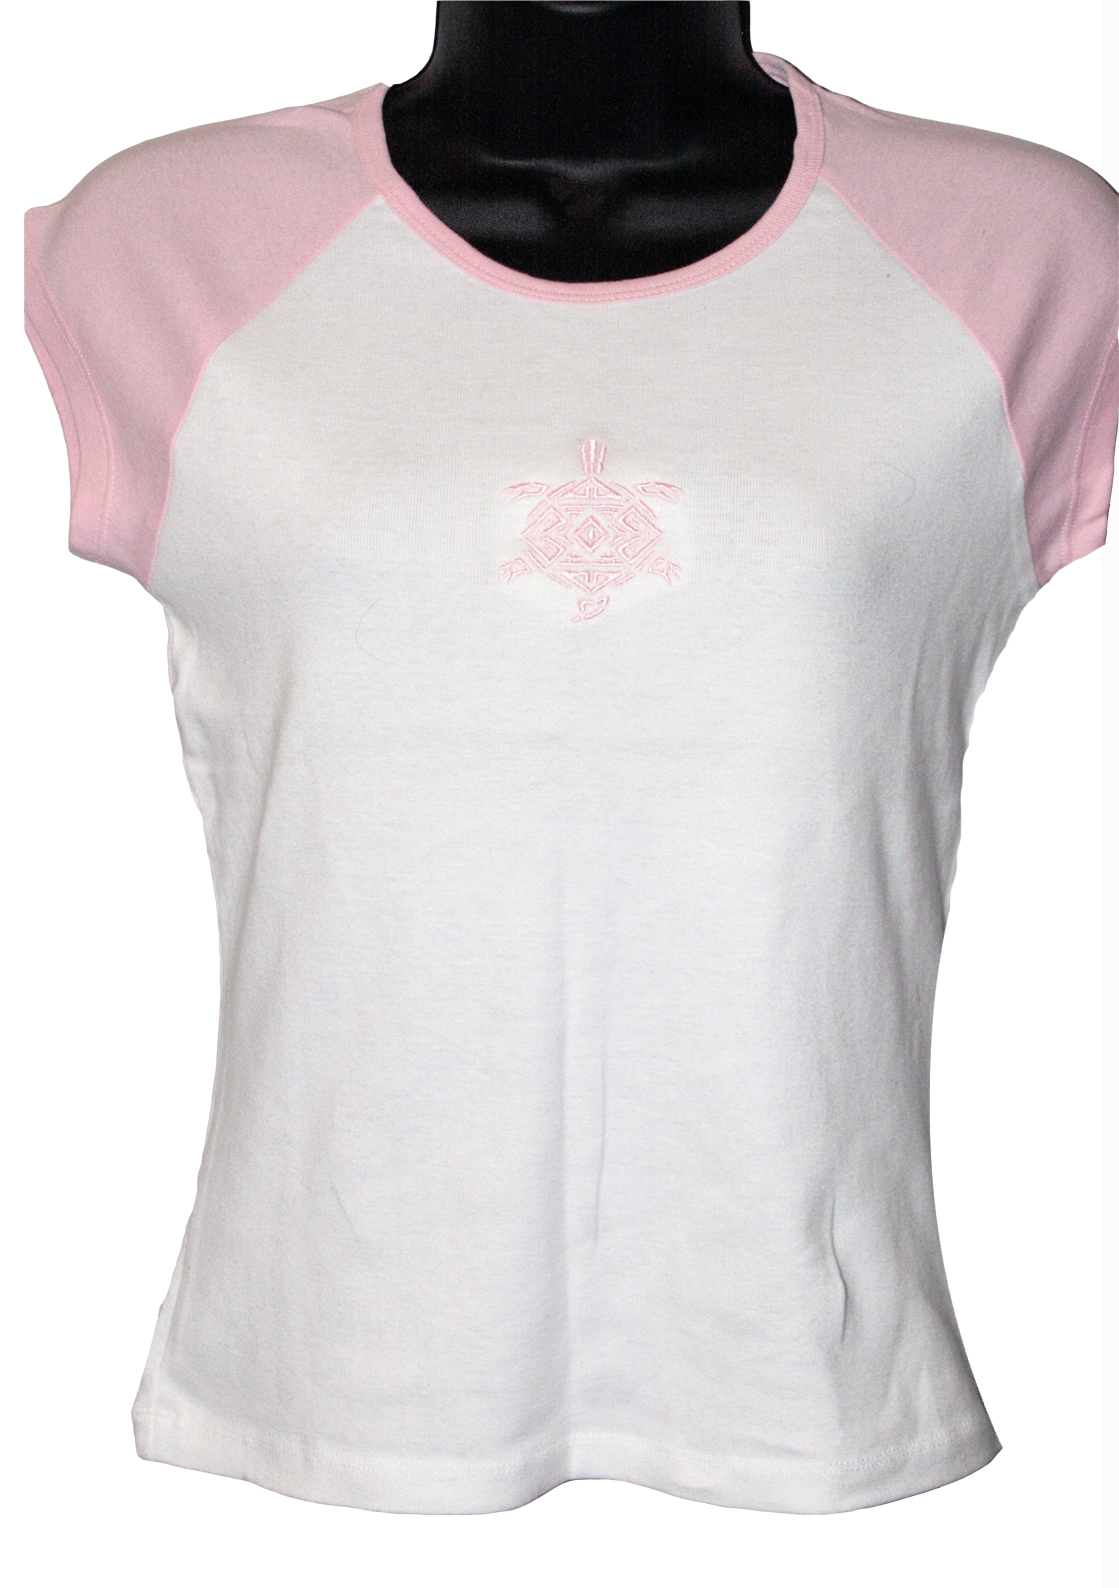 Women's Pink Baseball T-Shirt | Gathering the Vibes Music Festival